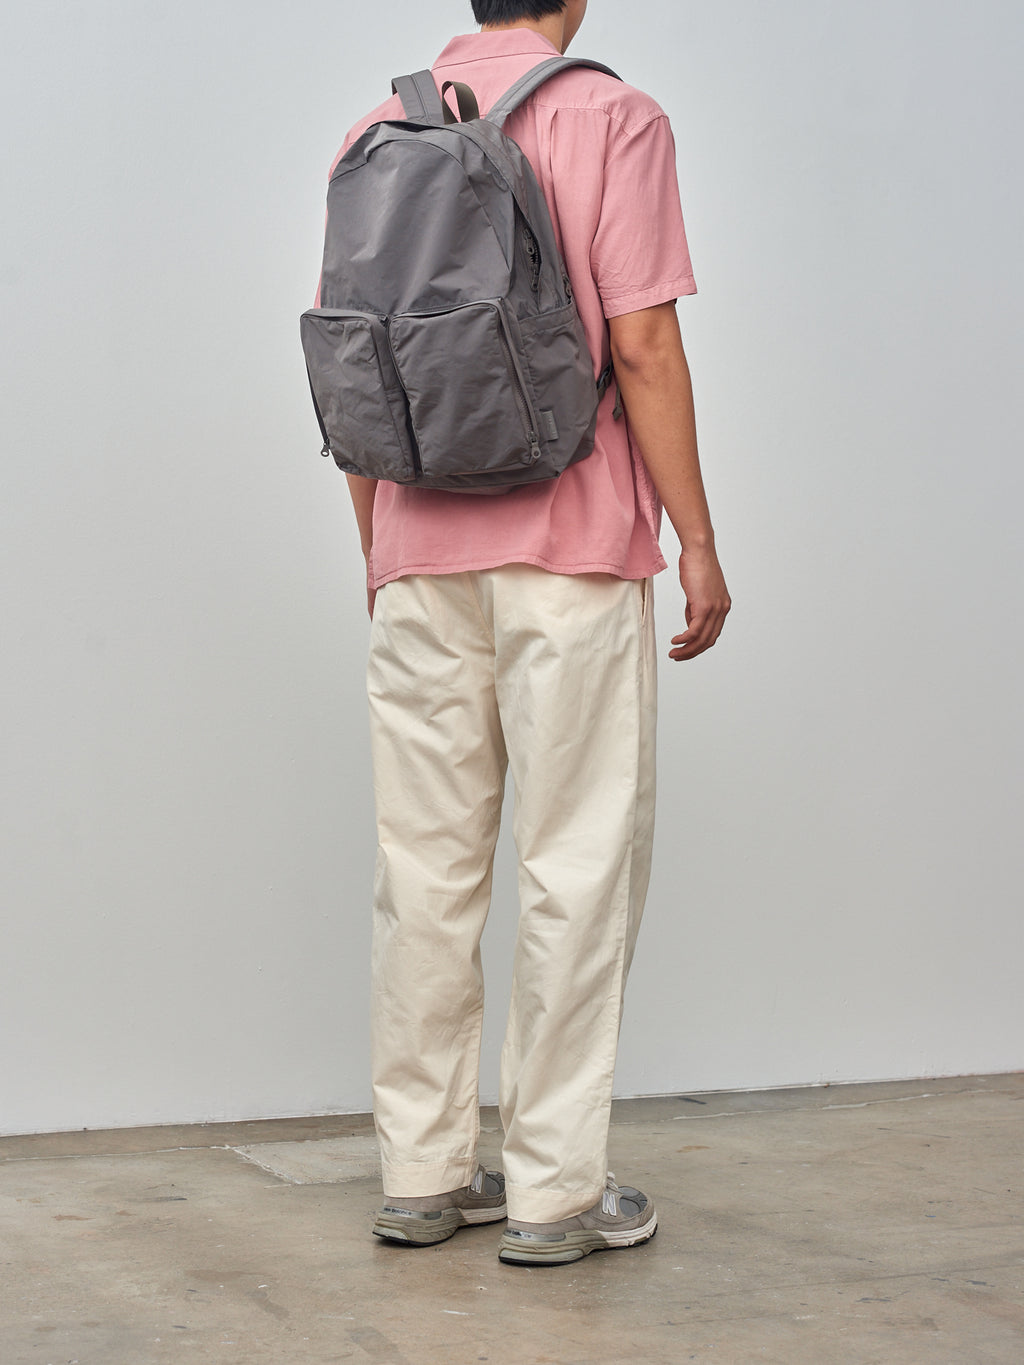 Split Yarn Backpack - Gray